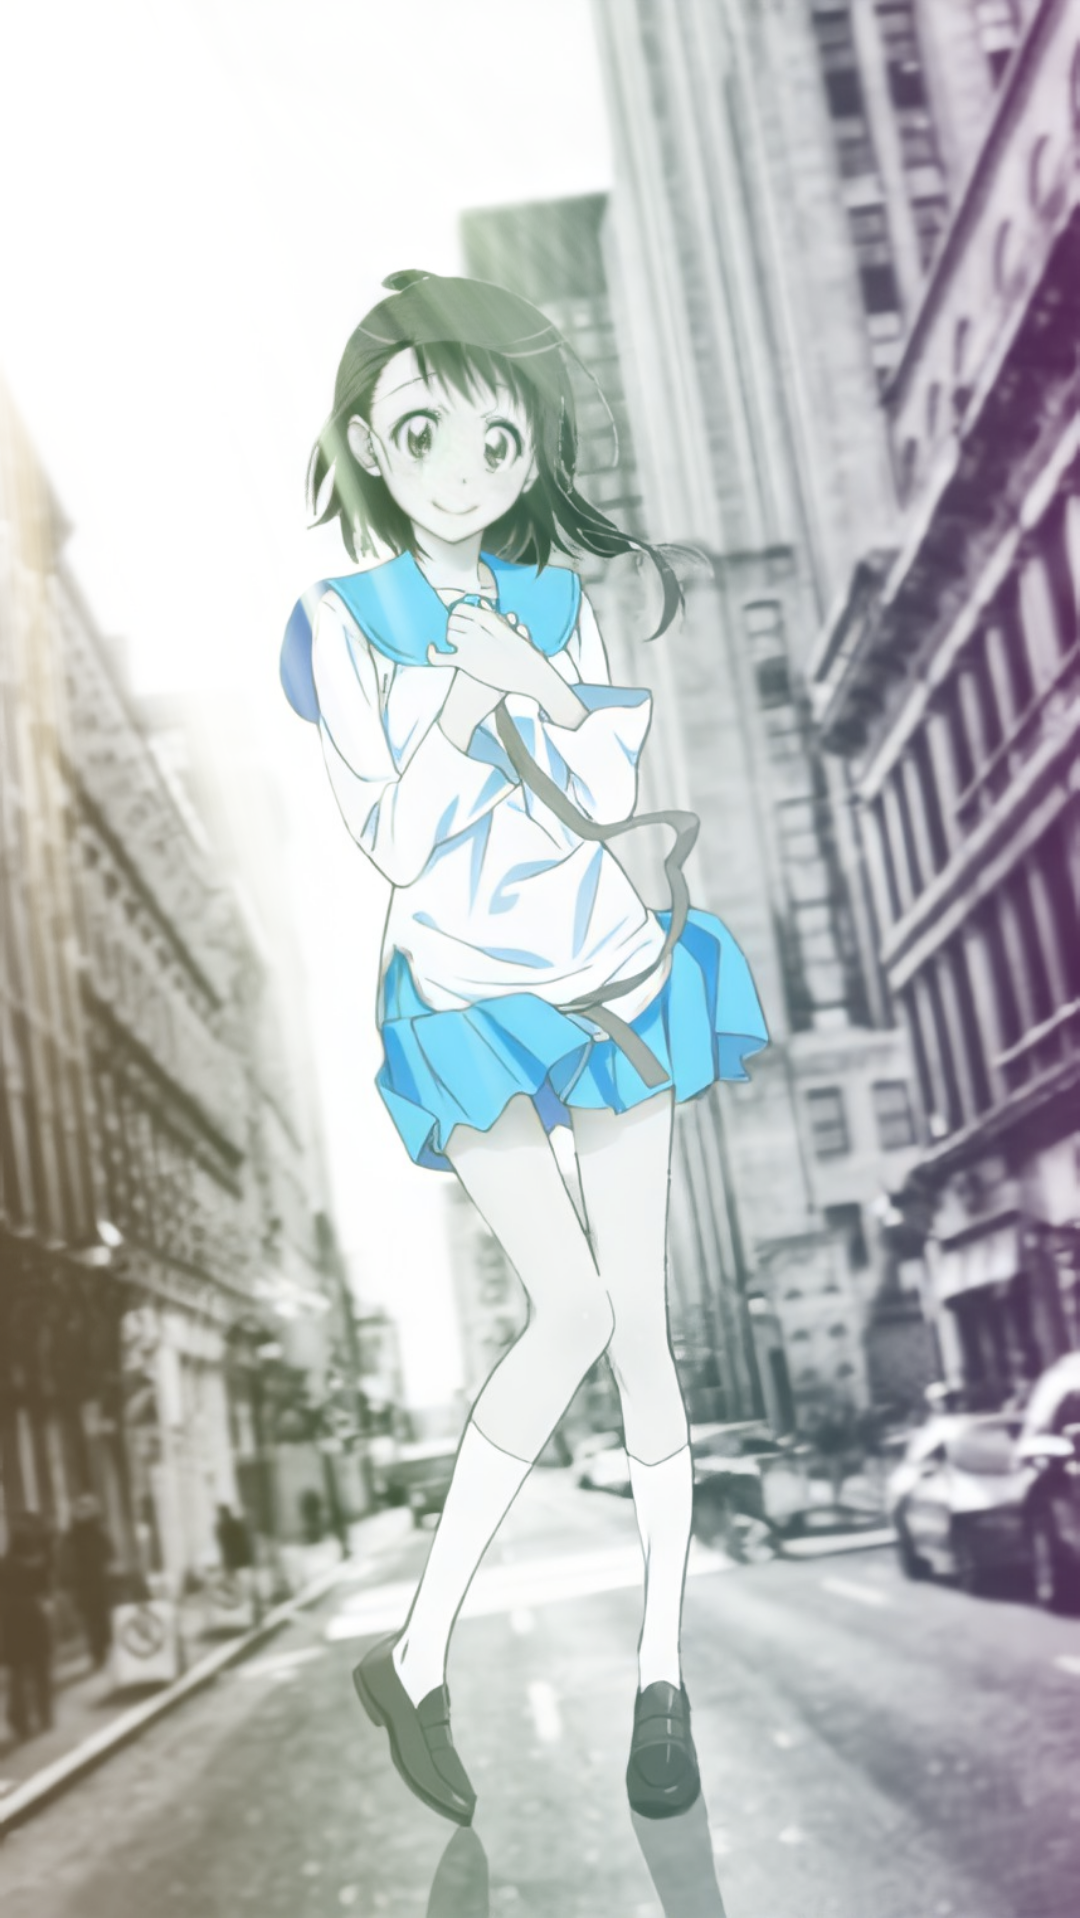 Anime 1080x1918 anime anime girls Onodera Kosaki Nisekoi school uniform picture-in-picture